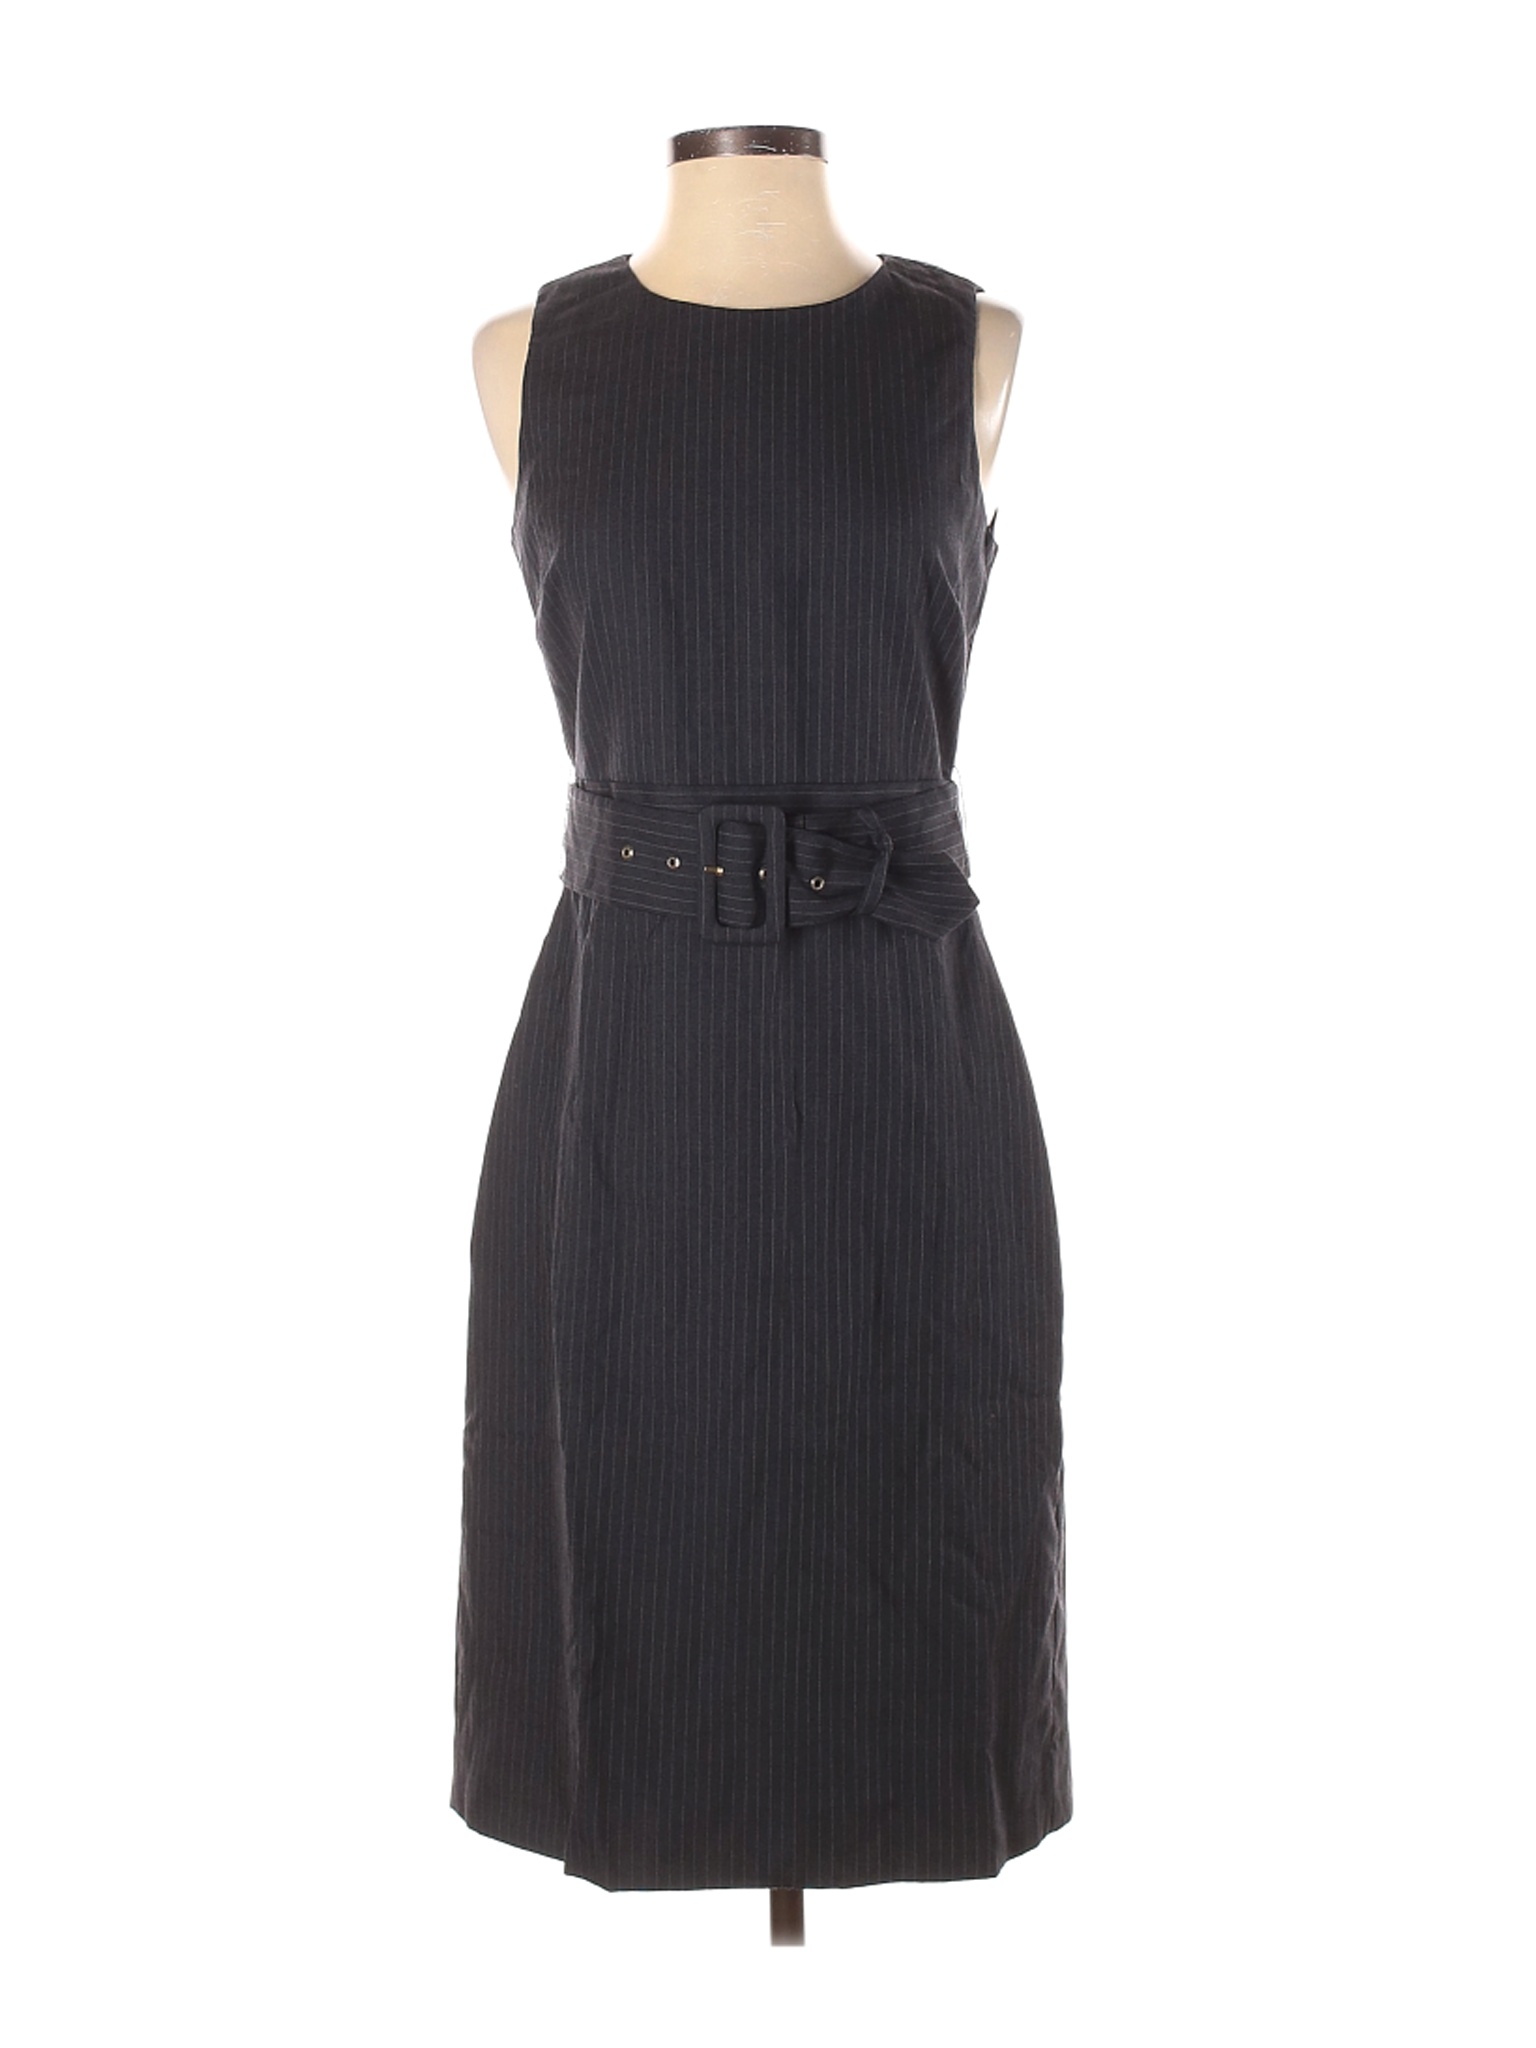 J.Crew Women Black Casual Dress 2 | eBay